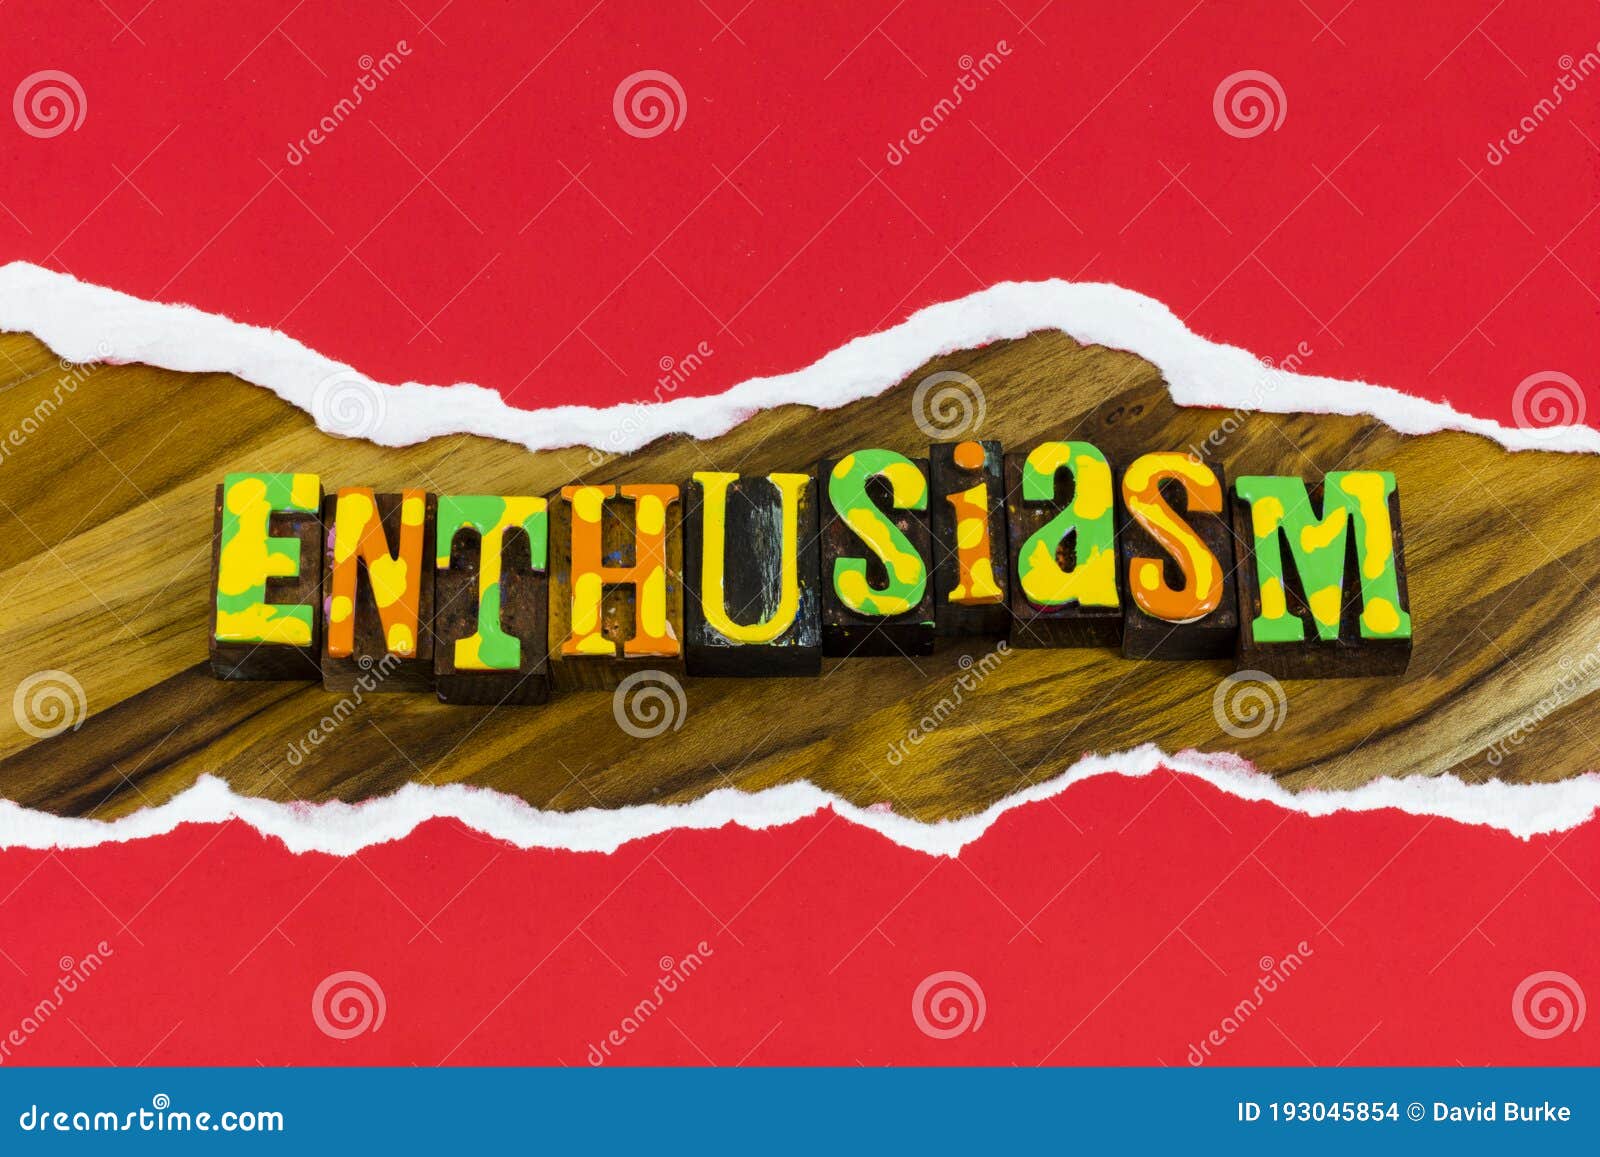 enthusiasm passion success happy lifestyle enthusiastic positive attitude